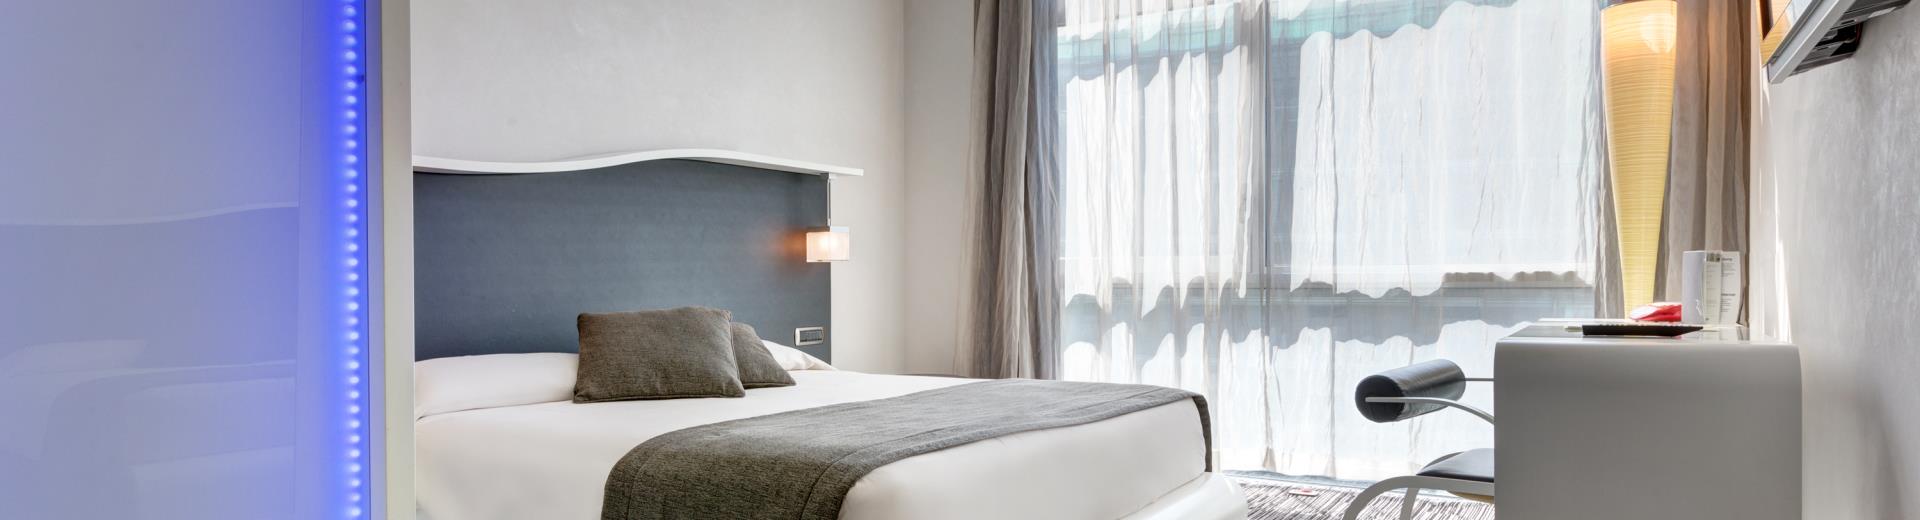 Camera Comfort doppia - Hotel Royal Santina Roma 4 stelle